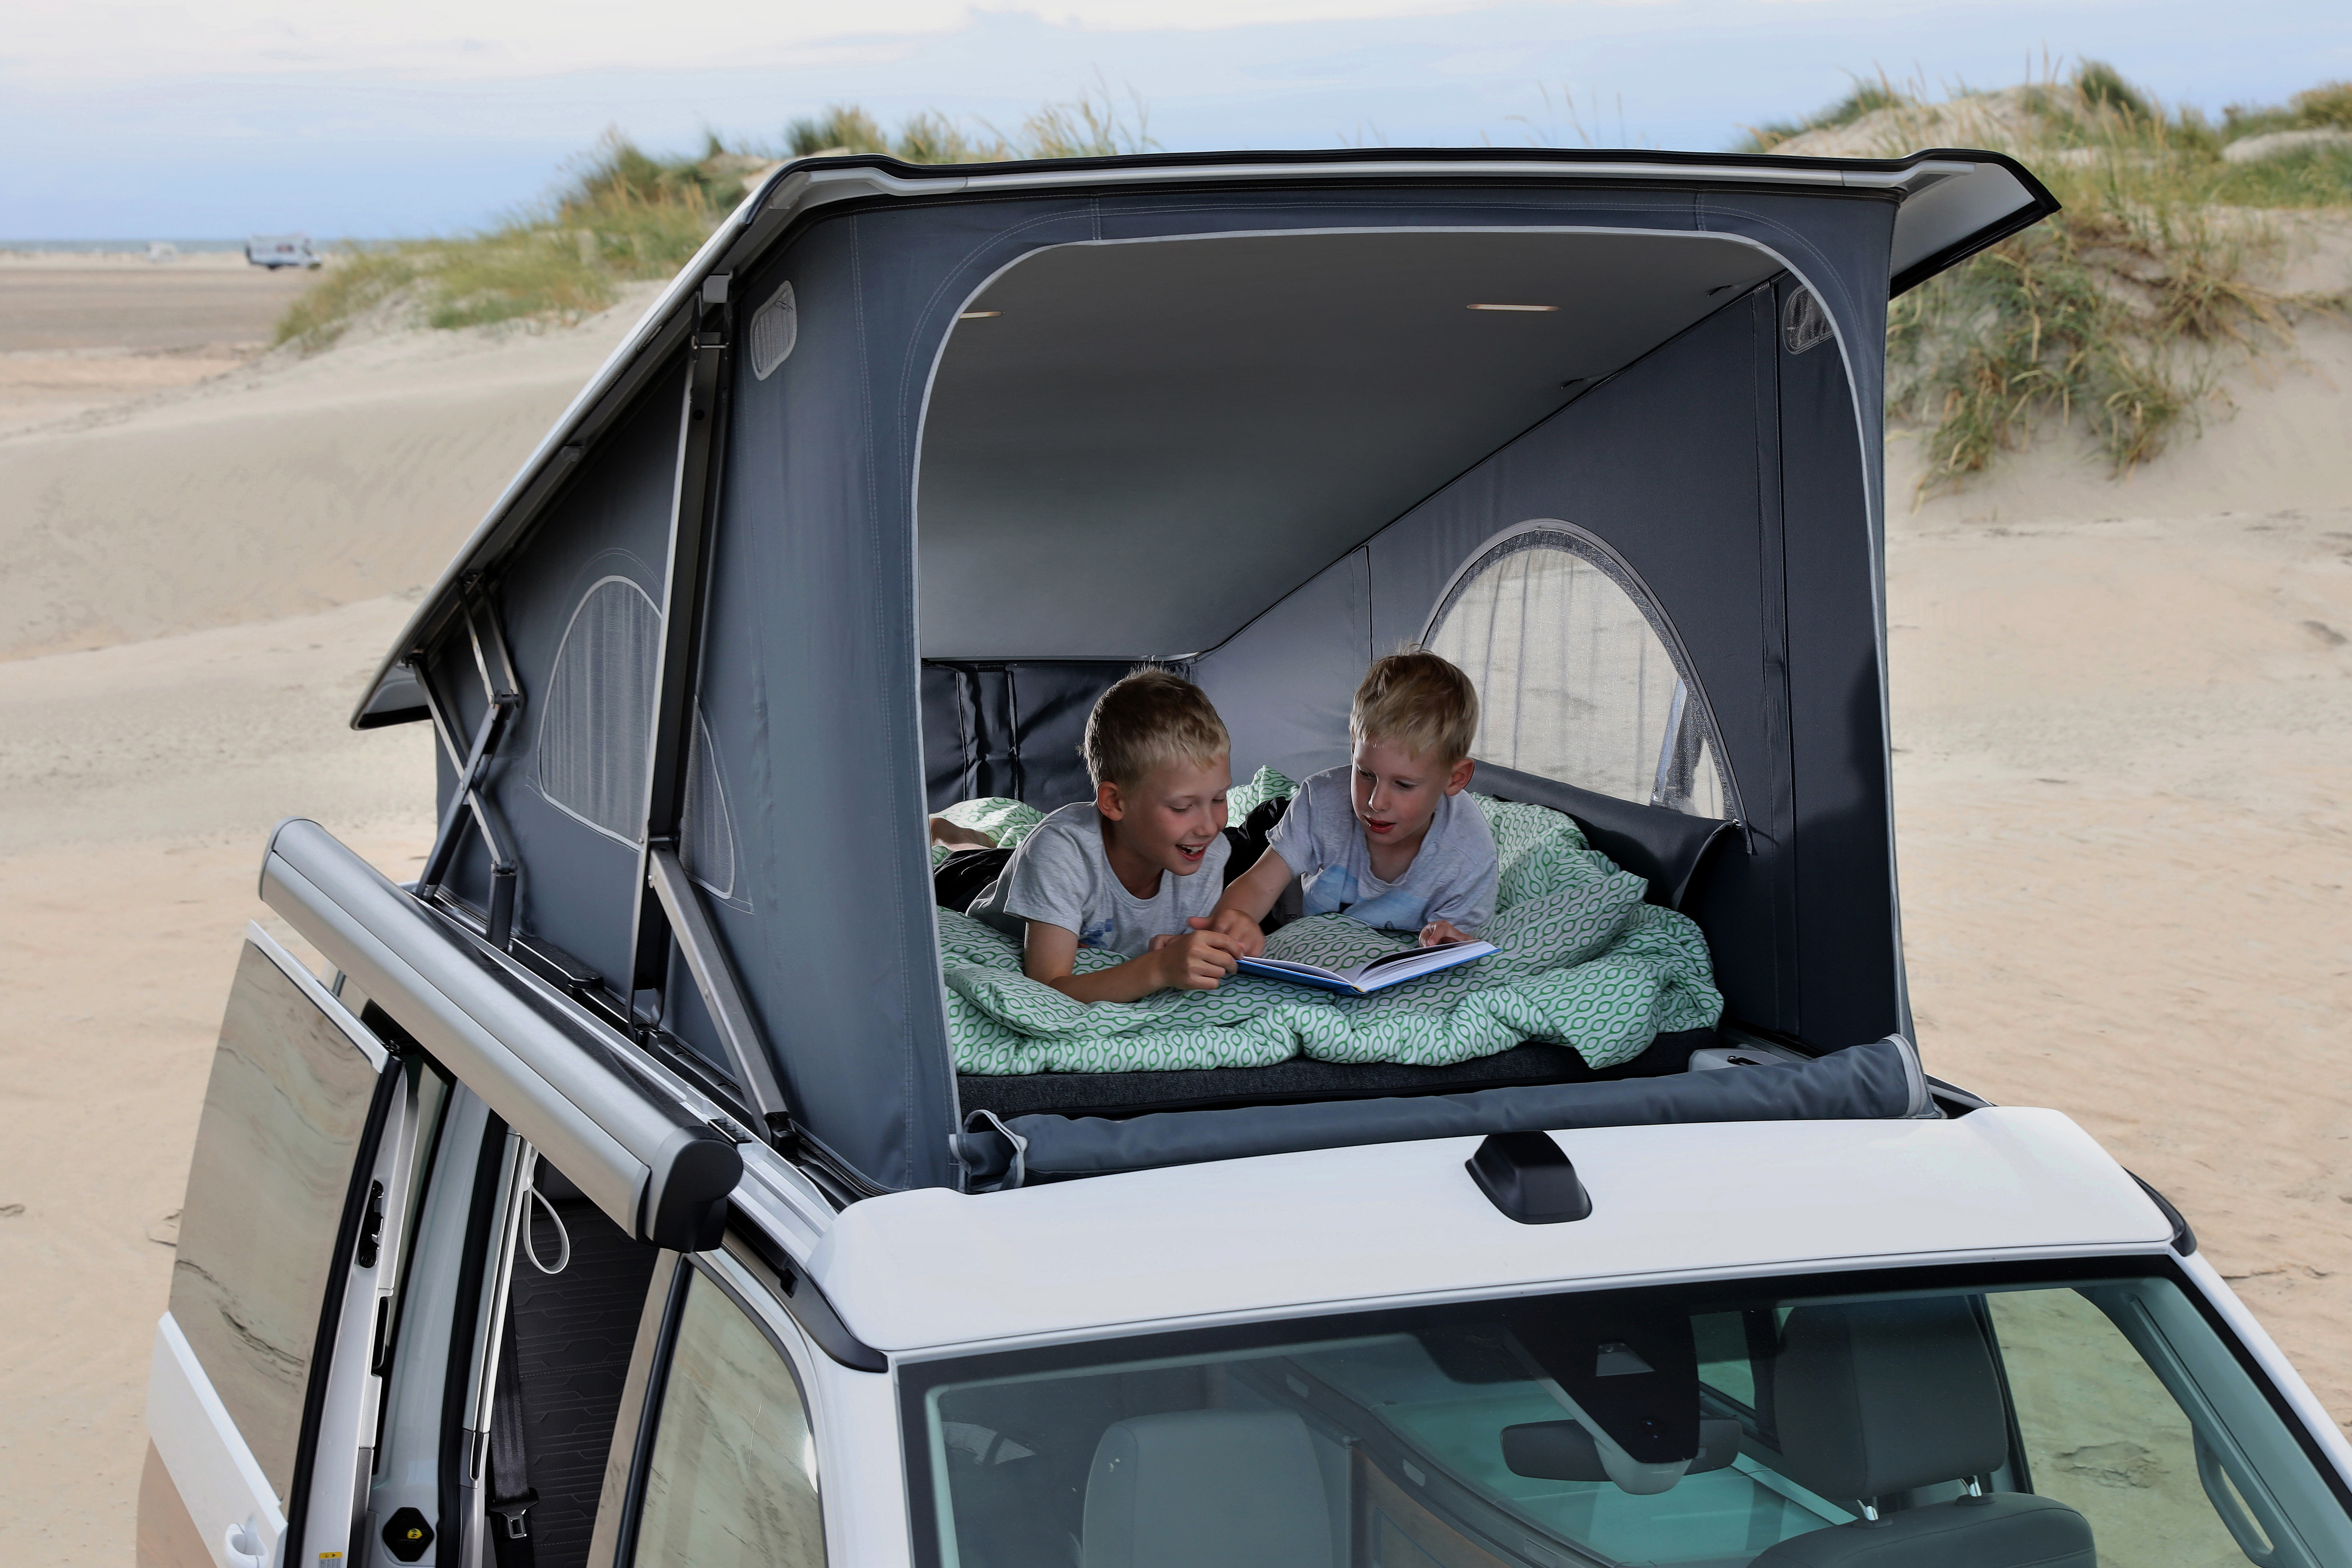 VW California 6.1, VW rolls out new California 6.1 camper van, ClassicCars.com Journal